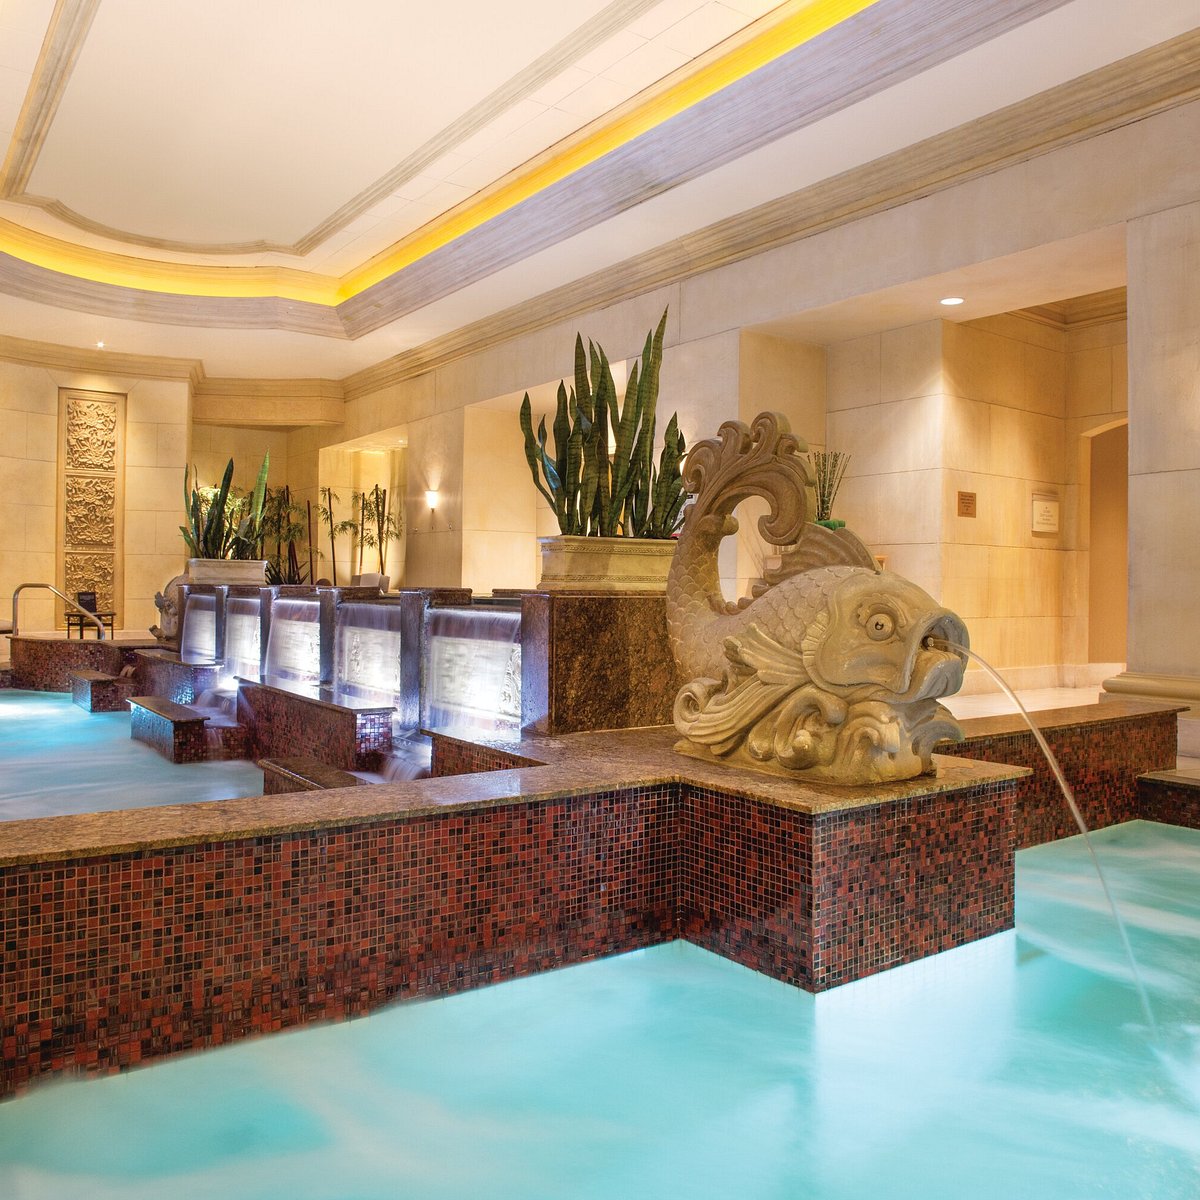 Mandalay Bay Resort and Casino from $43. Las Vegas Hotel Deals & Reviews -  KAYAK